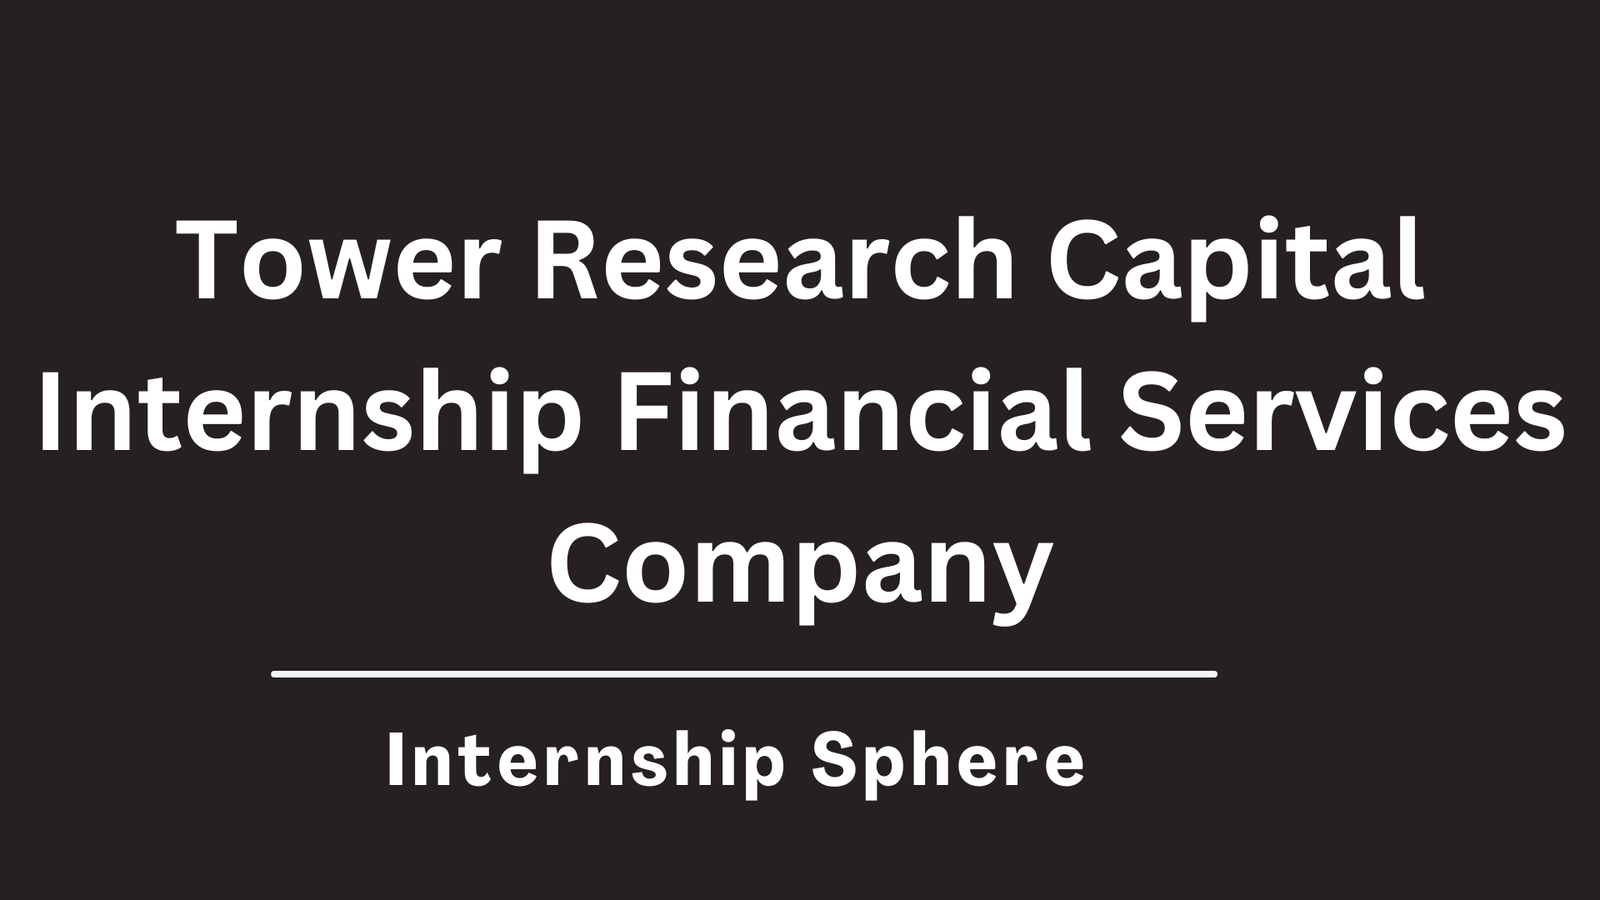 Tower Research Capital Internship